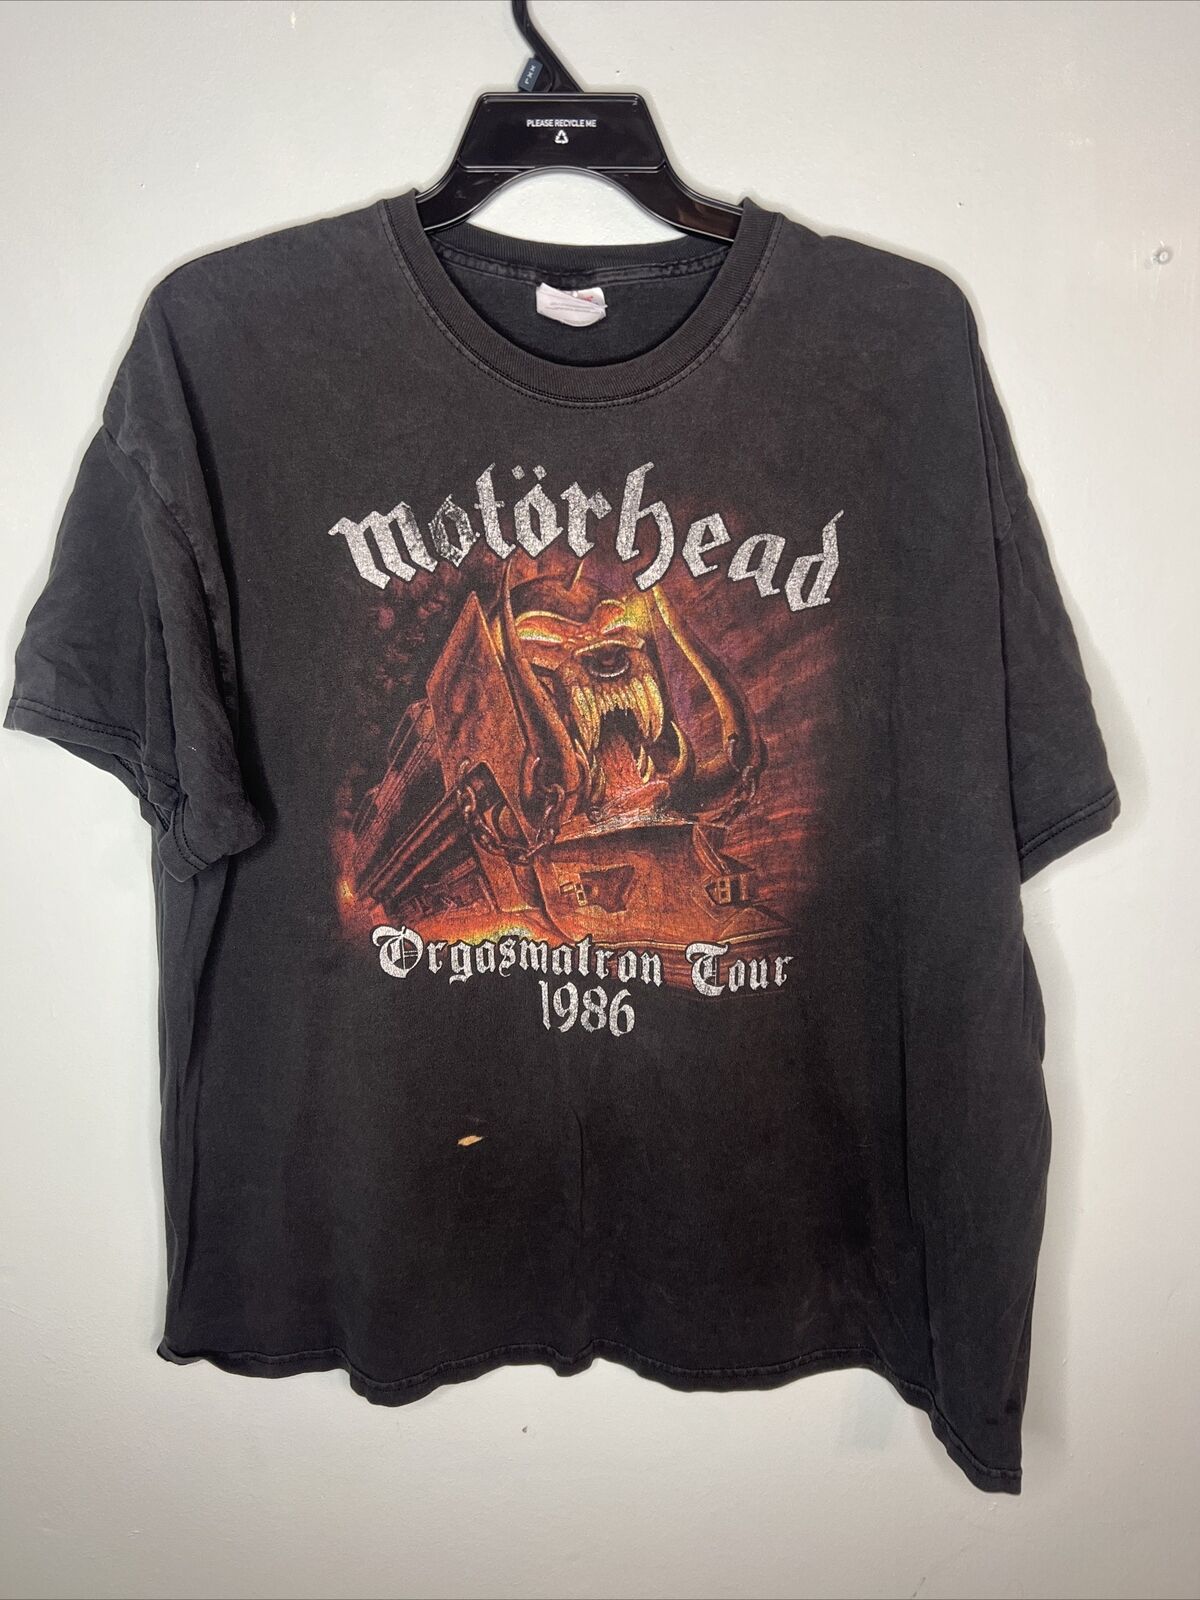 Vintage Motörhead Orgasmatron Tour 1986 Shirt Size 3XL - 90s/2000s Reissue